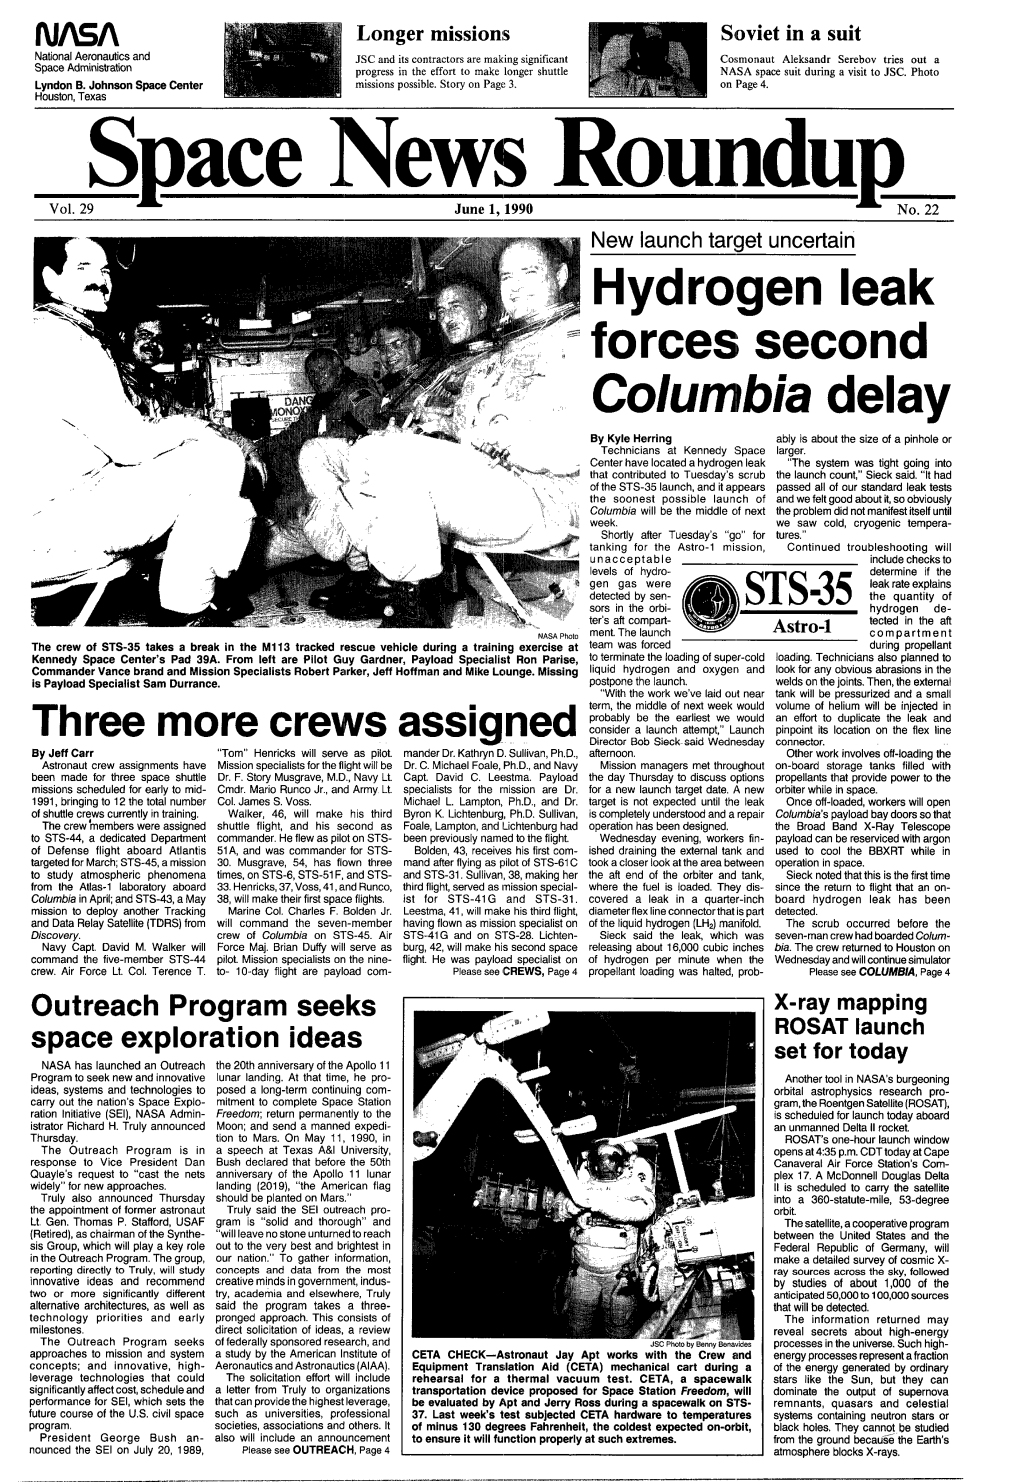 Hydrogen Leak Forces Second Columbia Delay %